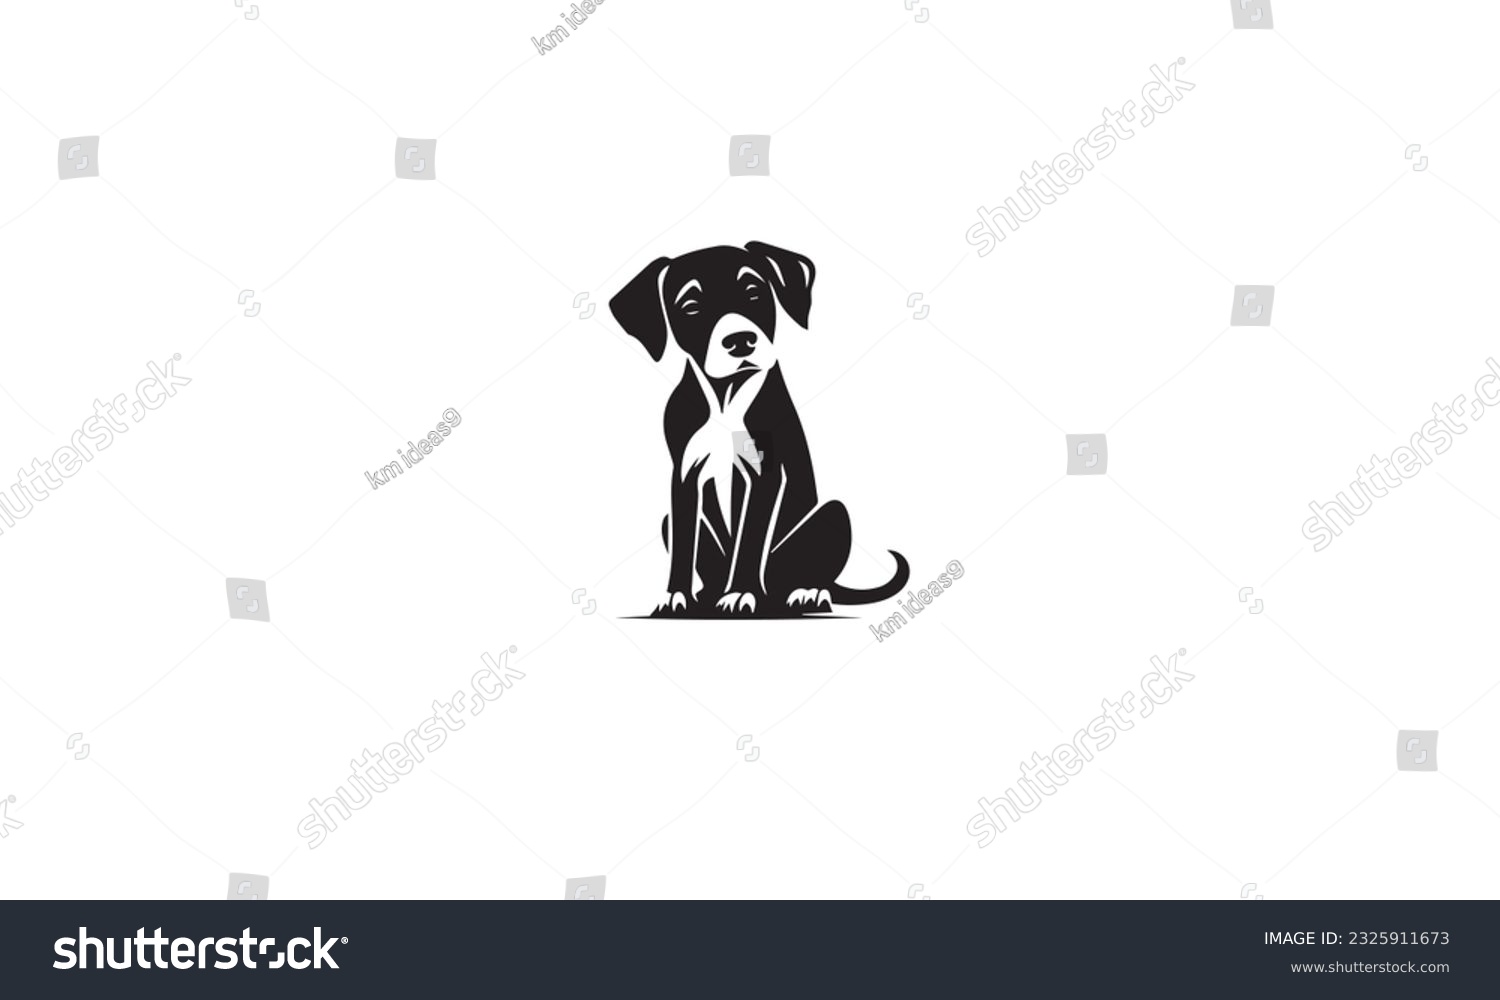 SVG of dog logo black simple flat icon on white background svg